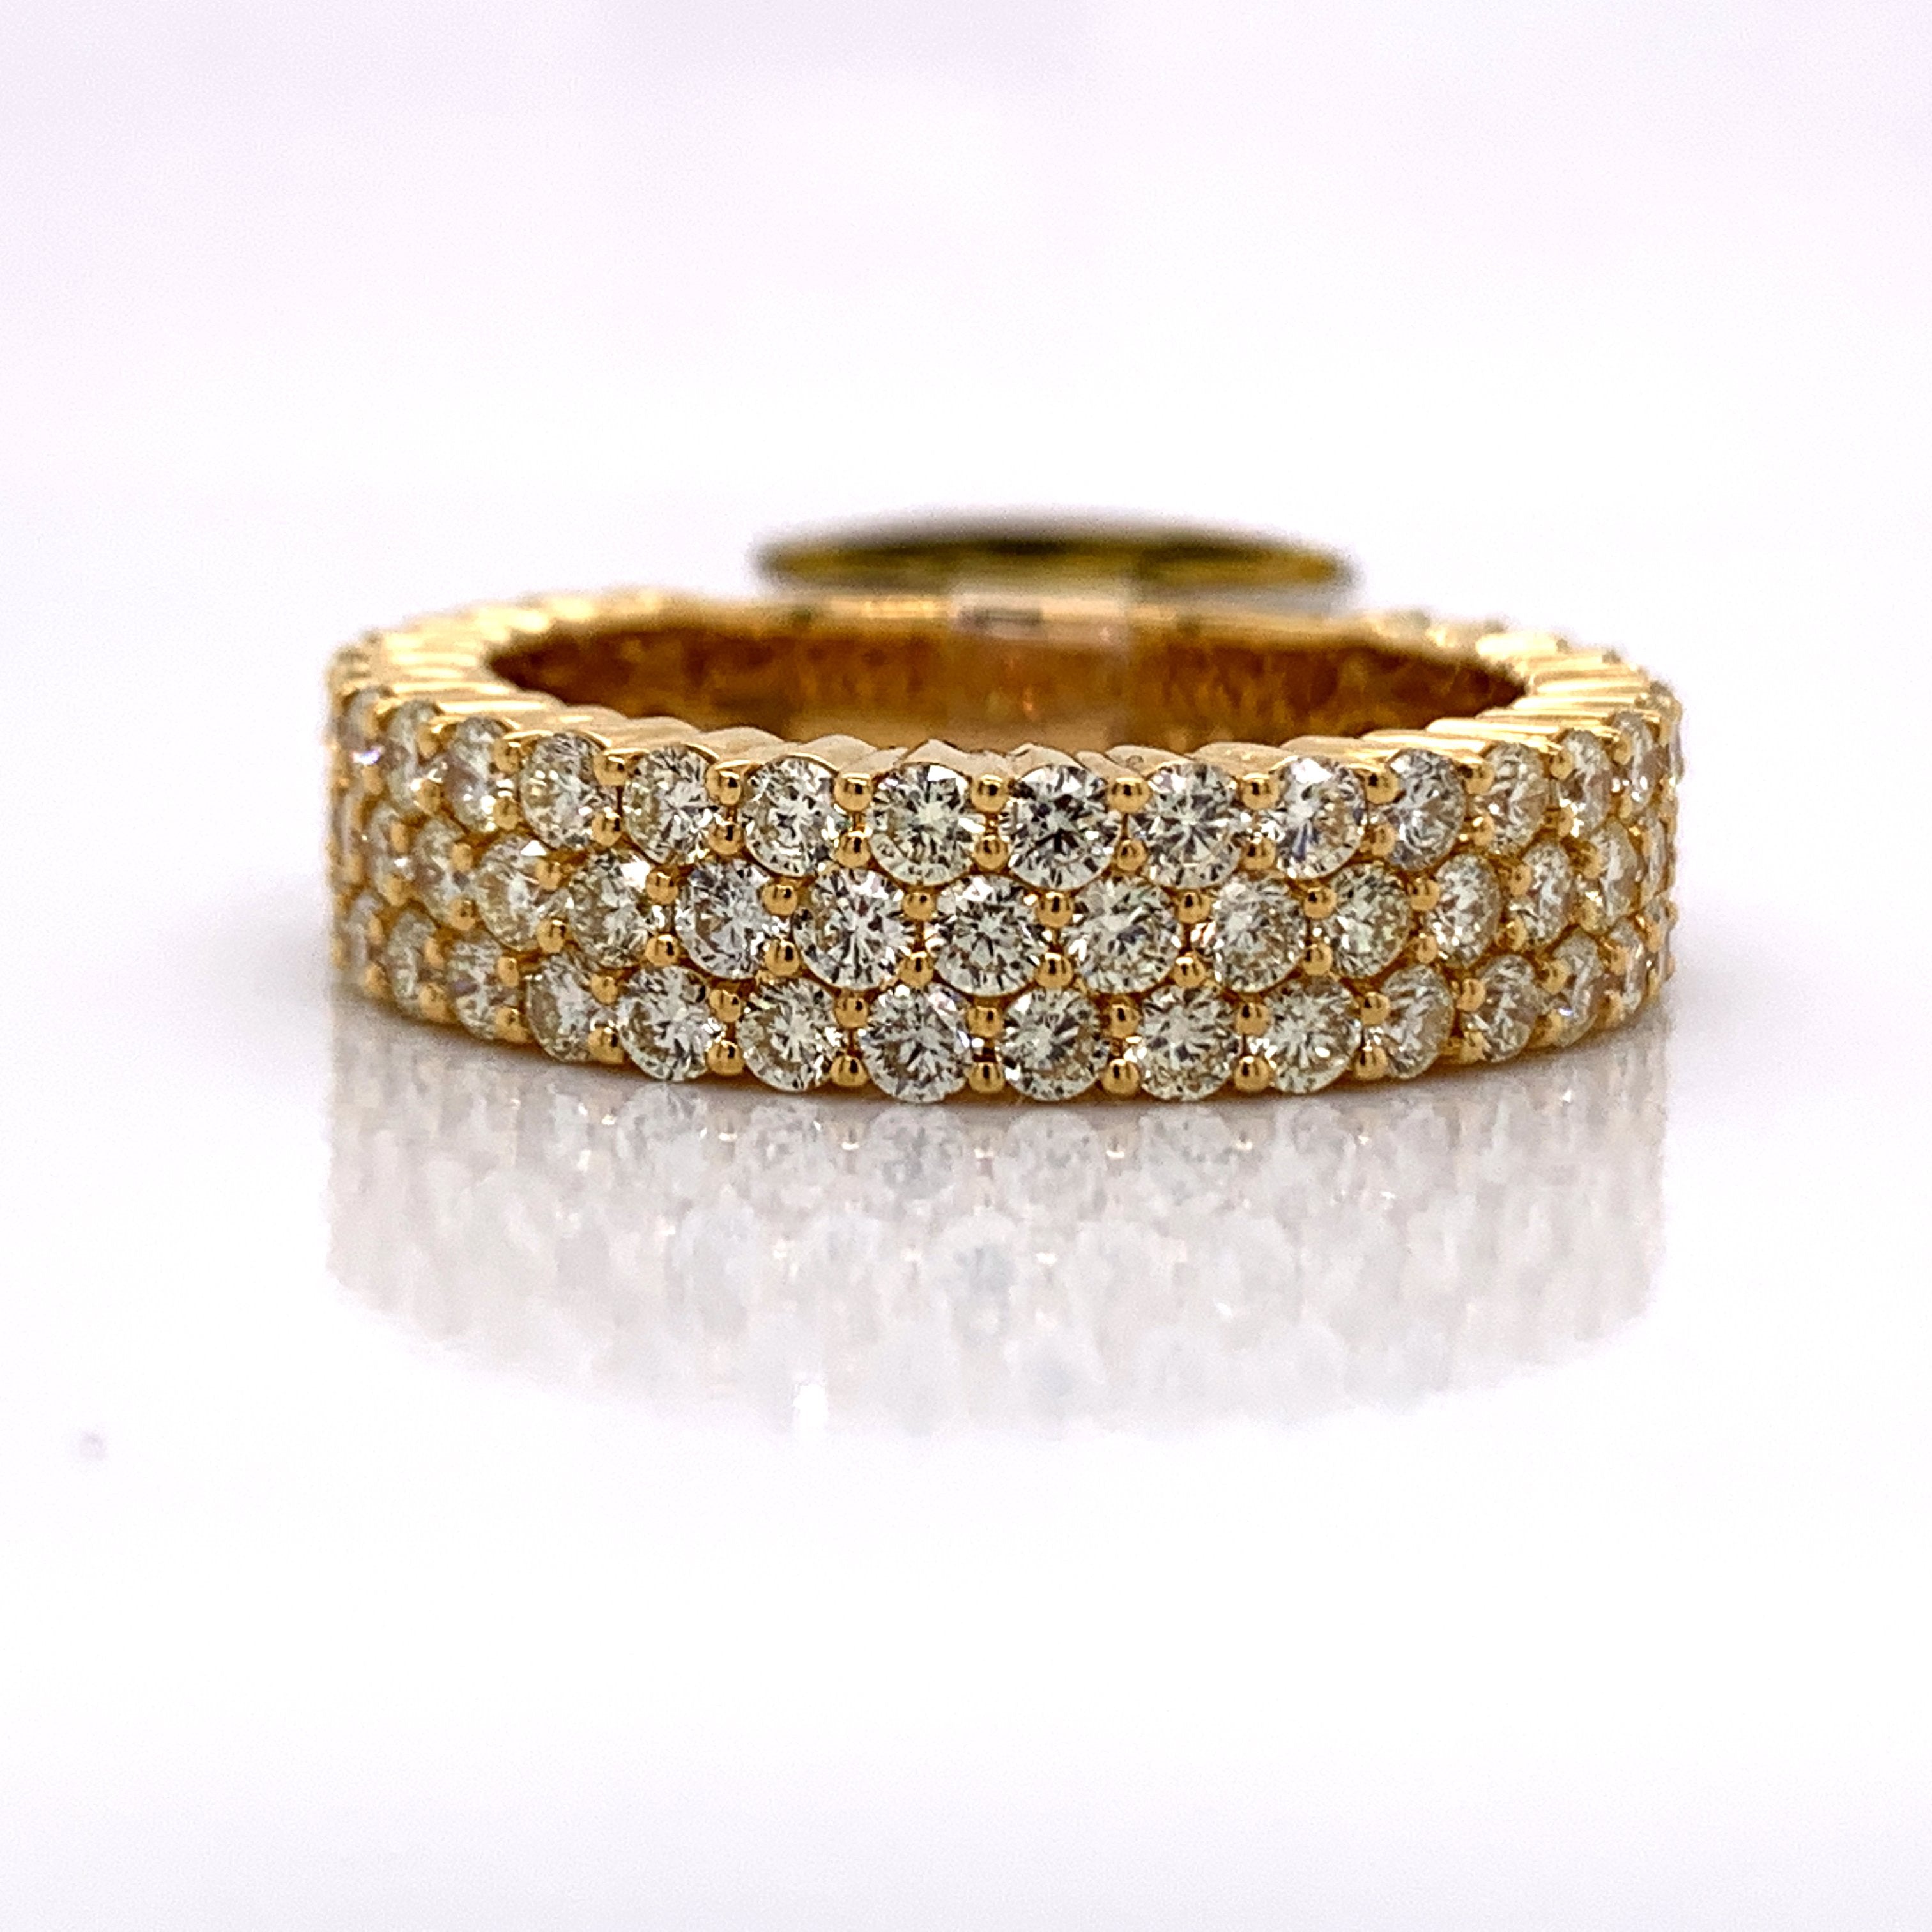 2.88CT Diamond Ring in 10K Gold - White Carat Diamonds 